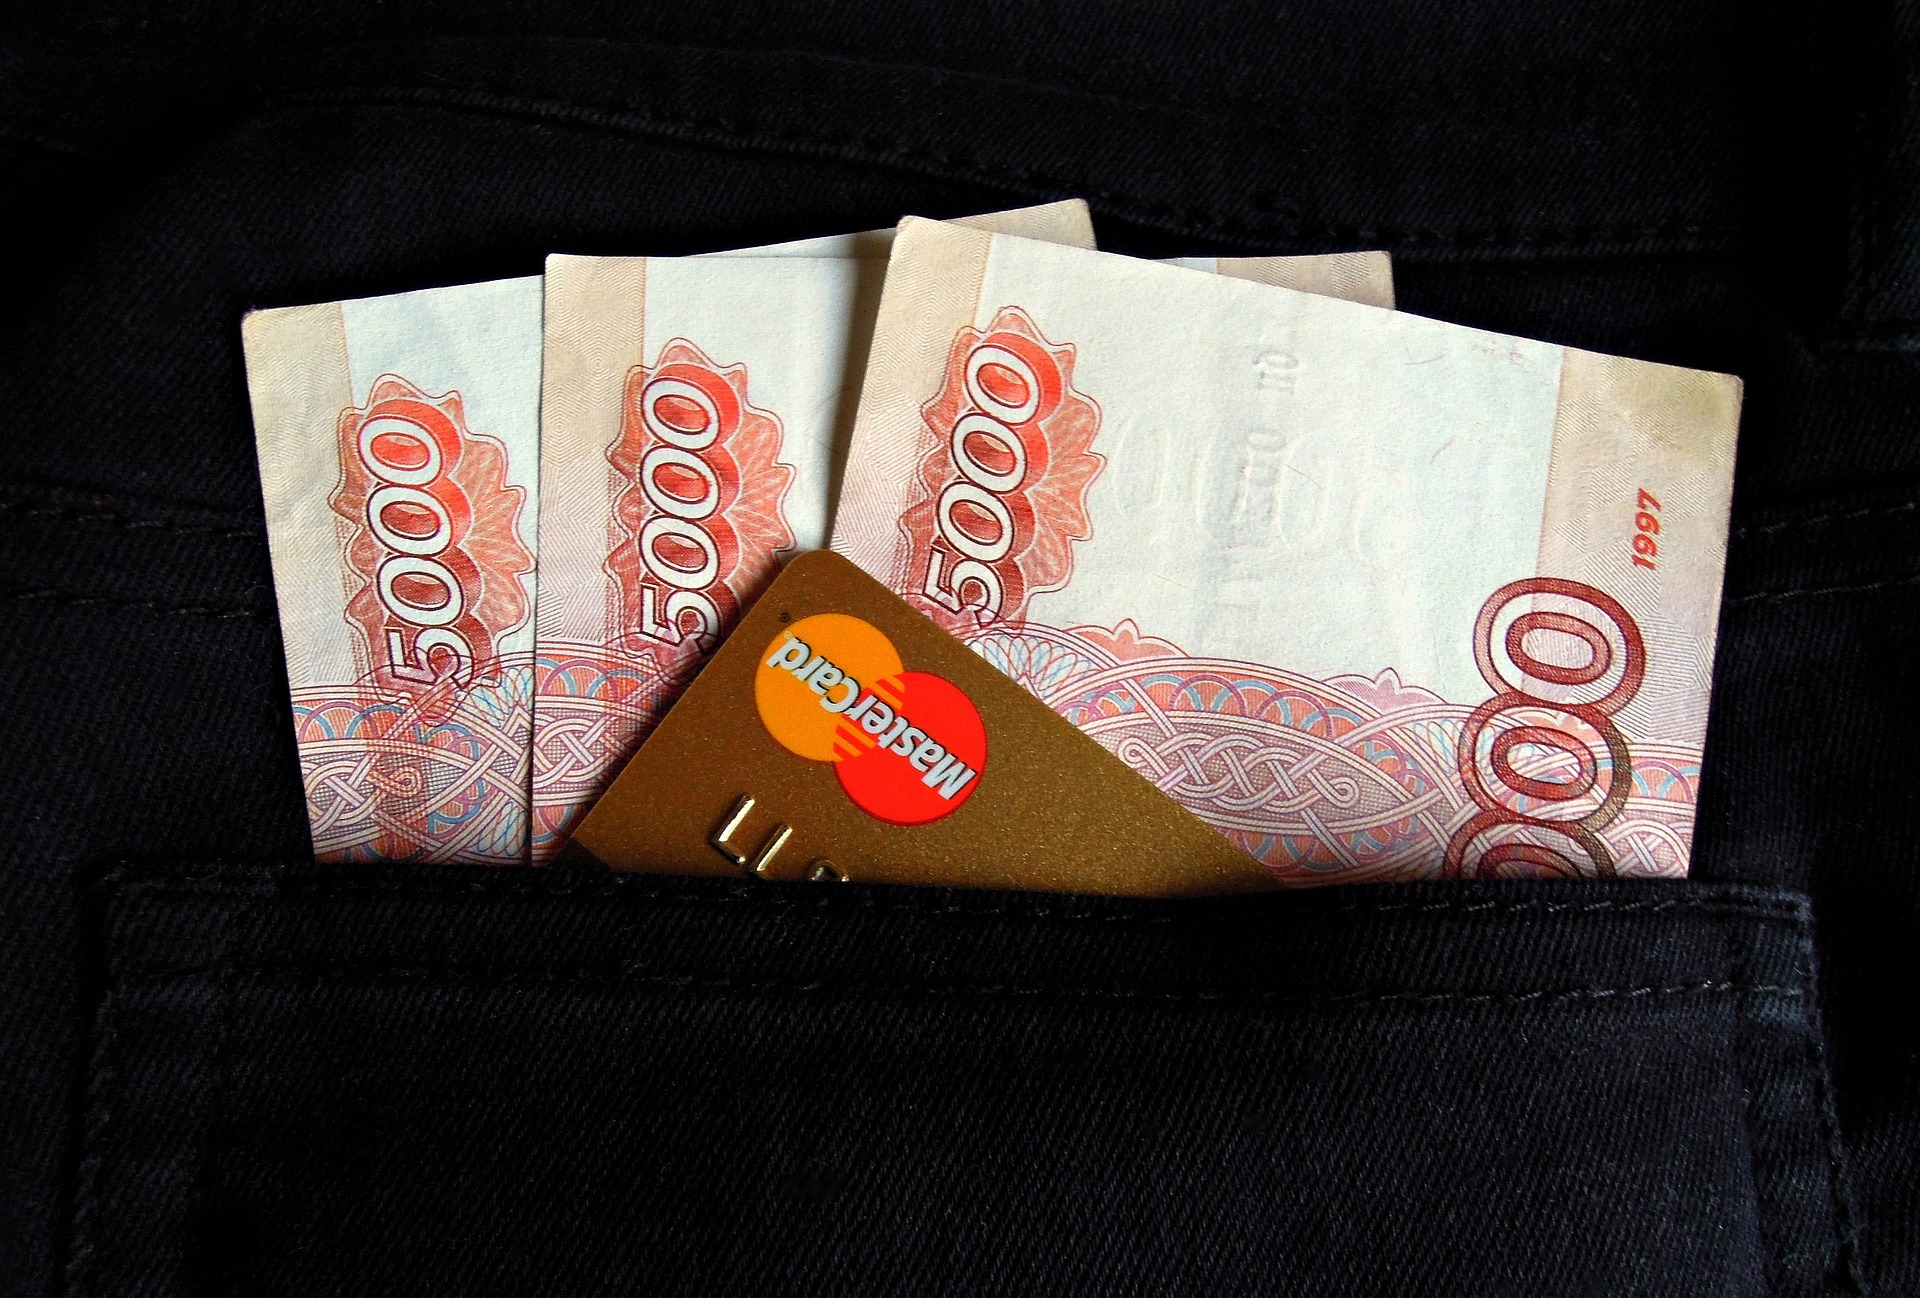 UK crime agency arrests ‘wealthy Russian’ over money laundering